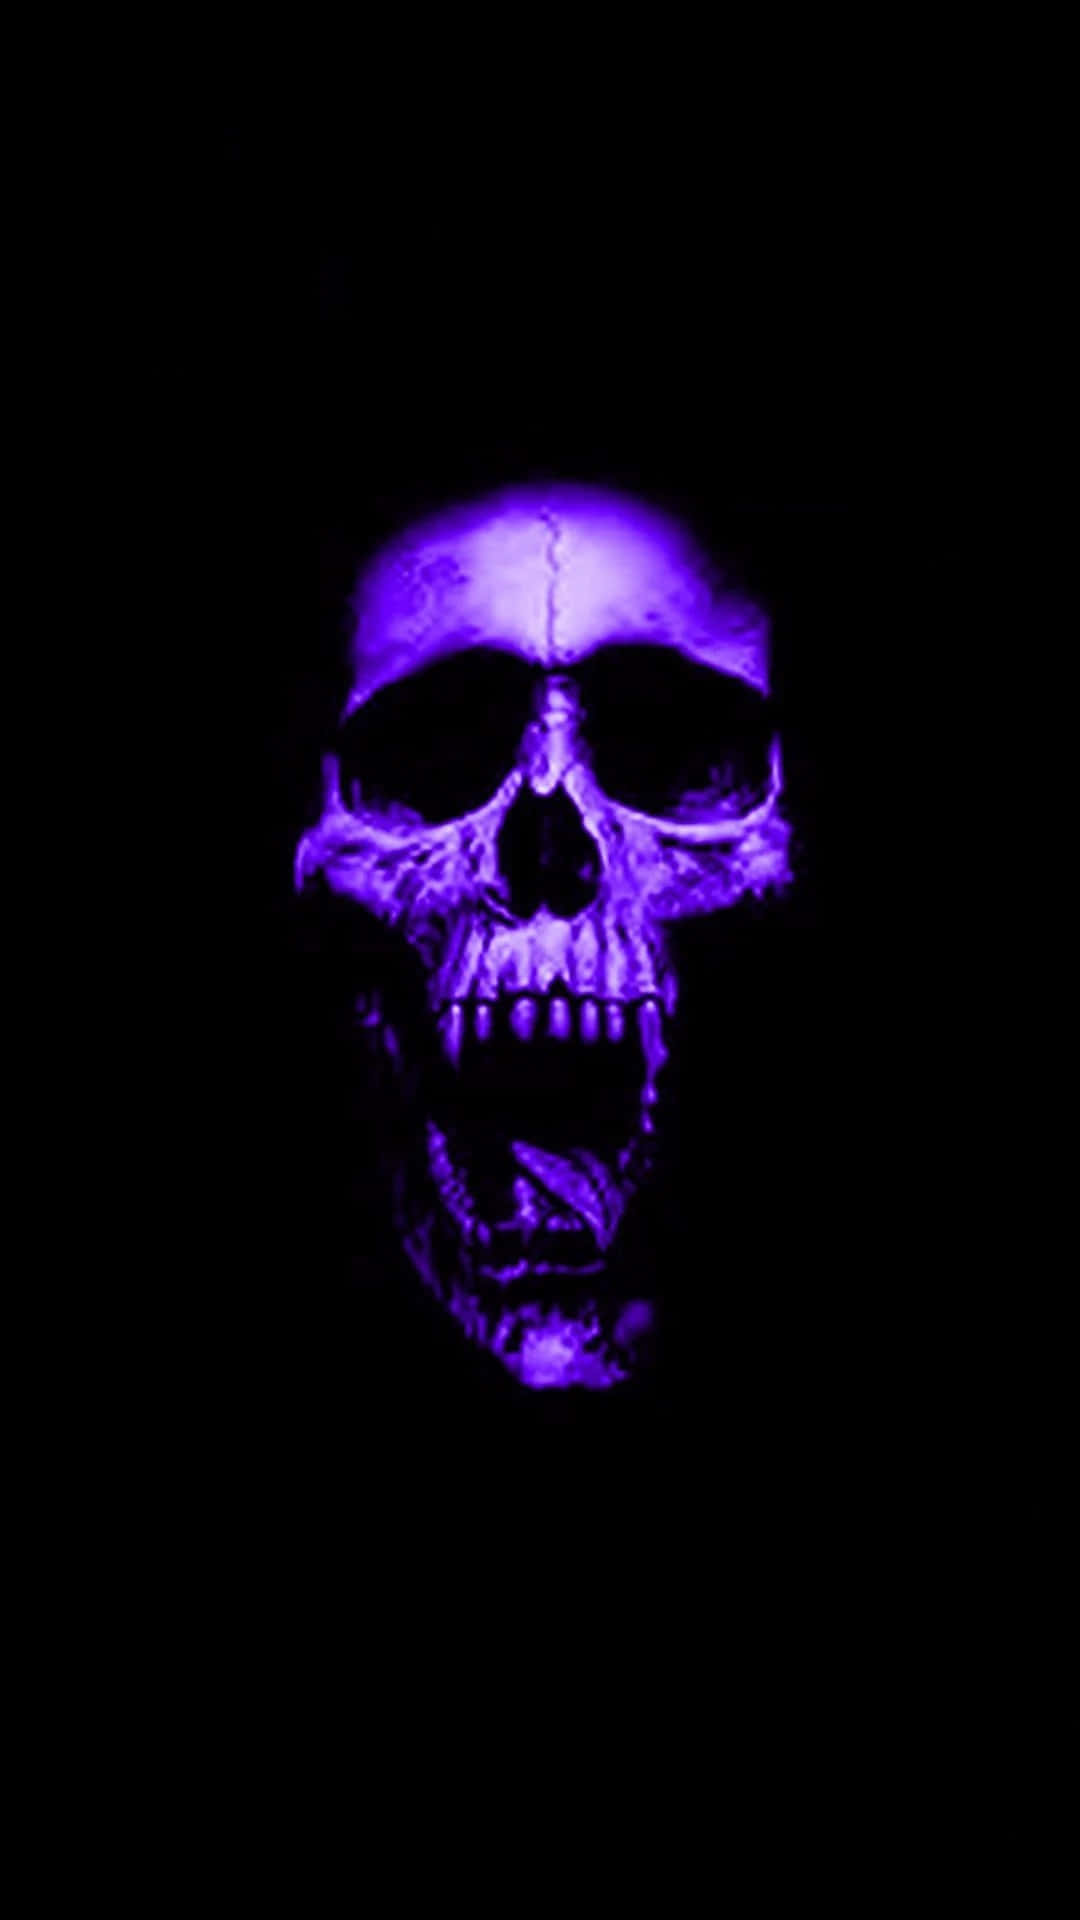 A Purple Skull Is Lit Up In The Dark